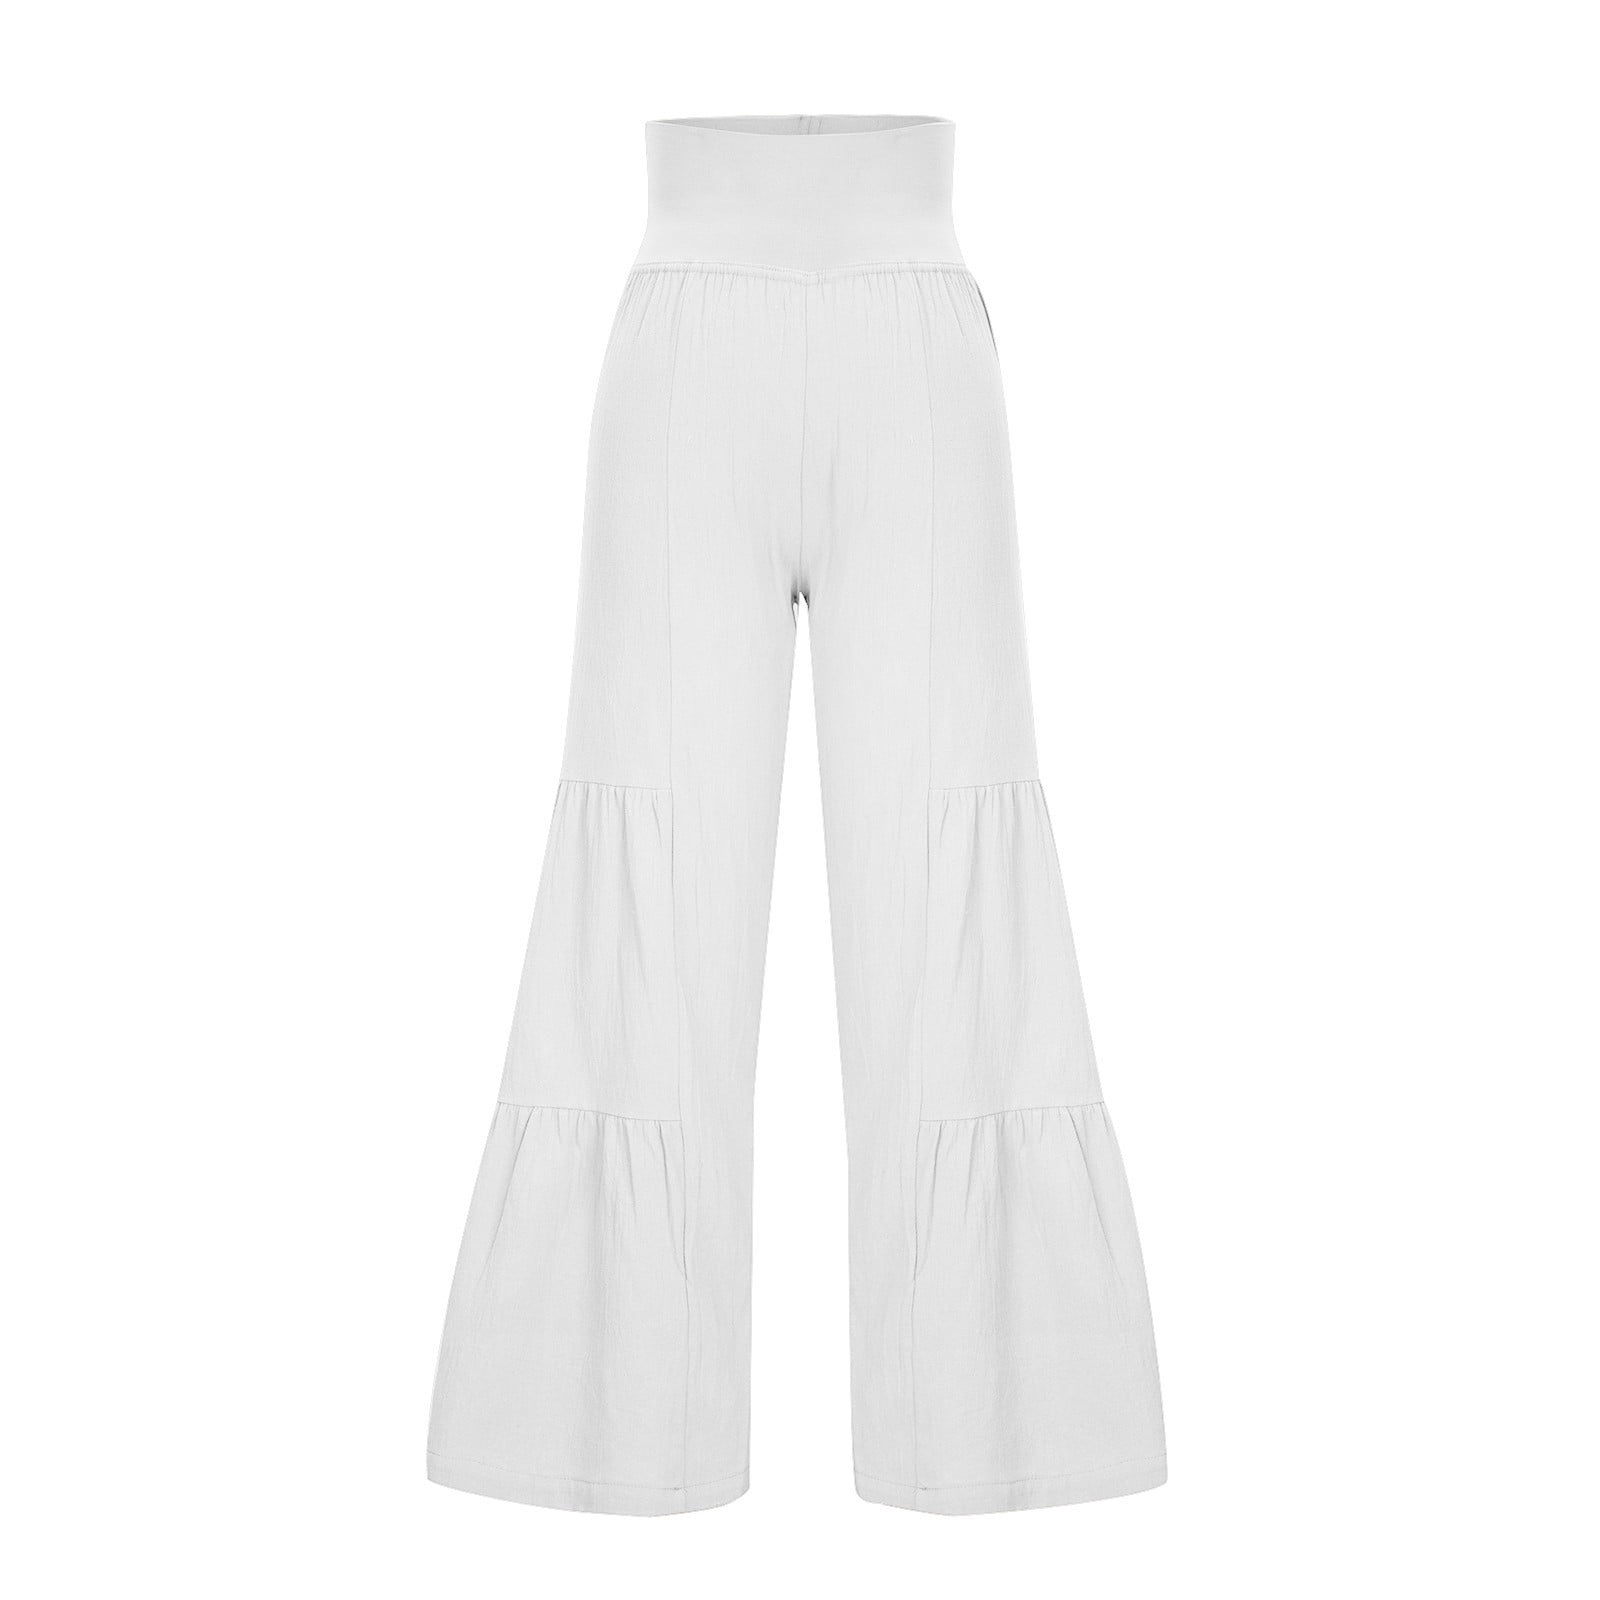 JNGSA Womens Palazzo Long Pants High Waist Wide Leg Stretchy Loose Fit Casual  Trousers Elastic Ruffle Baggy Pants White 12 